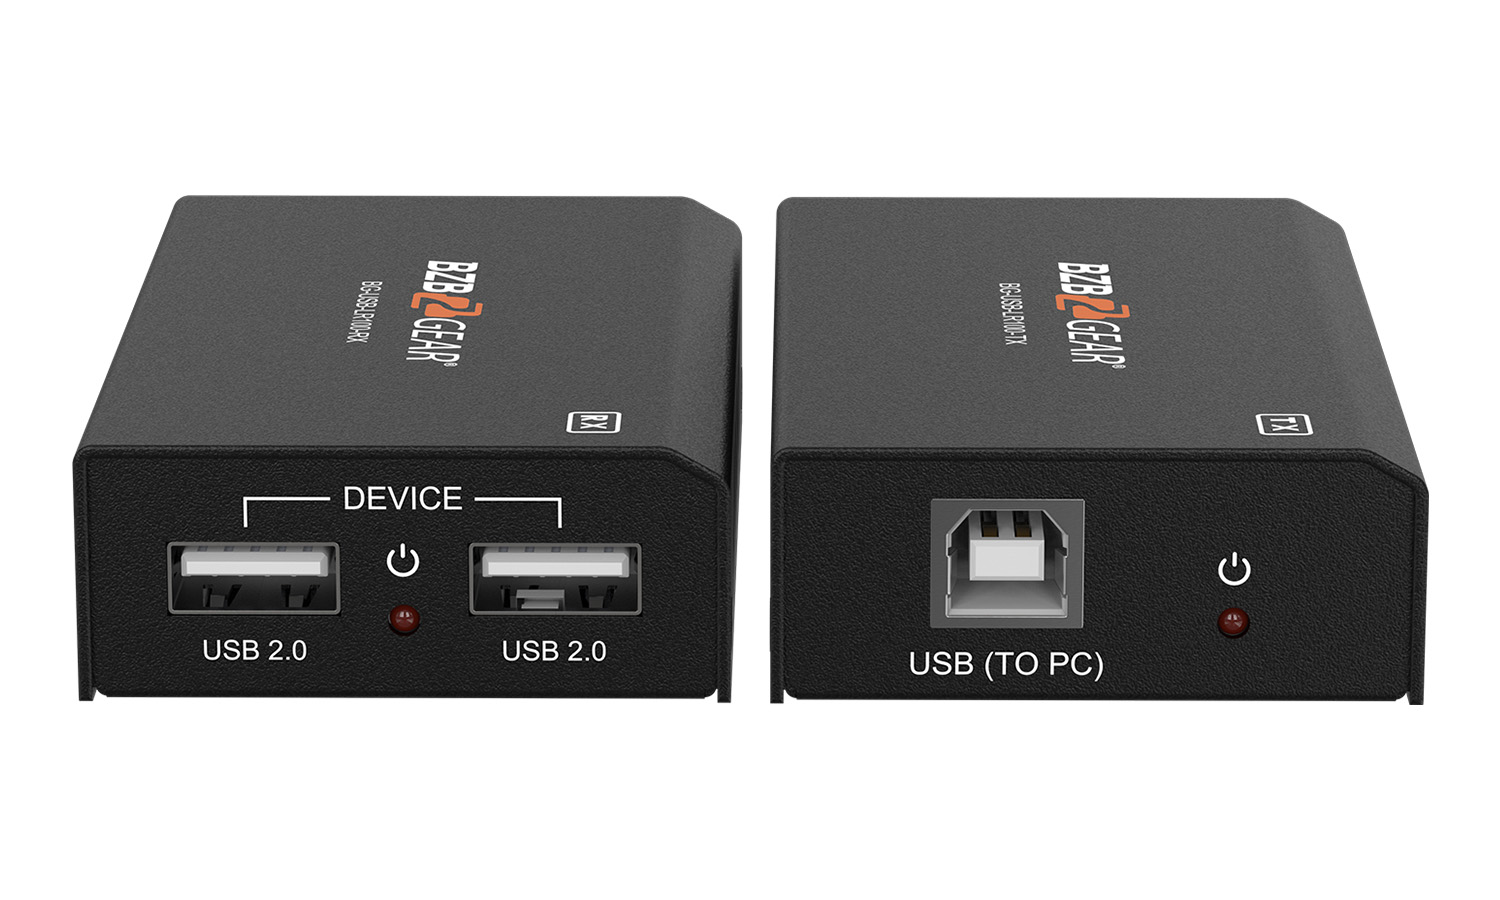 BZBGEAR BG-USB-LR100 2-Port USB 2.0 Extender over a Single CAT5E/6/7 Cable up to 330ft